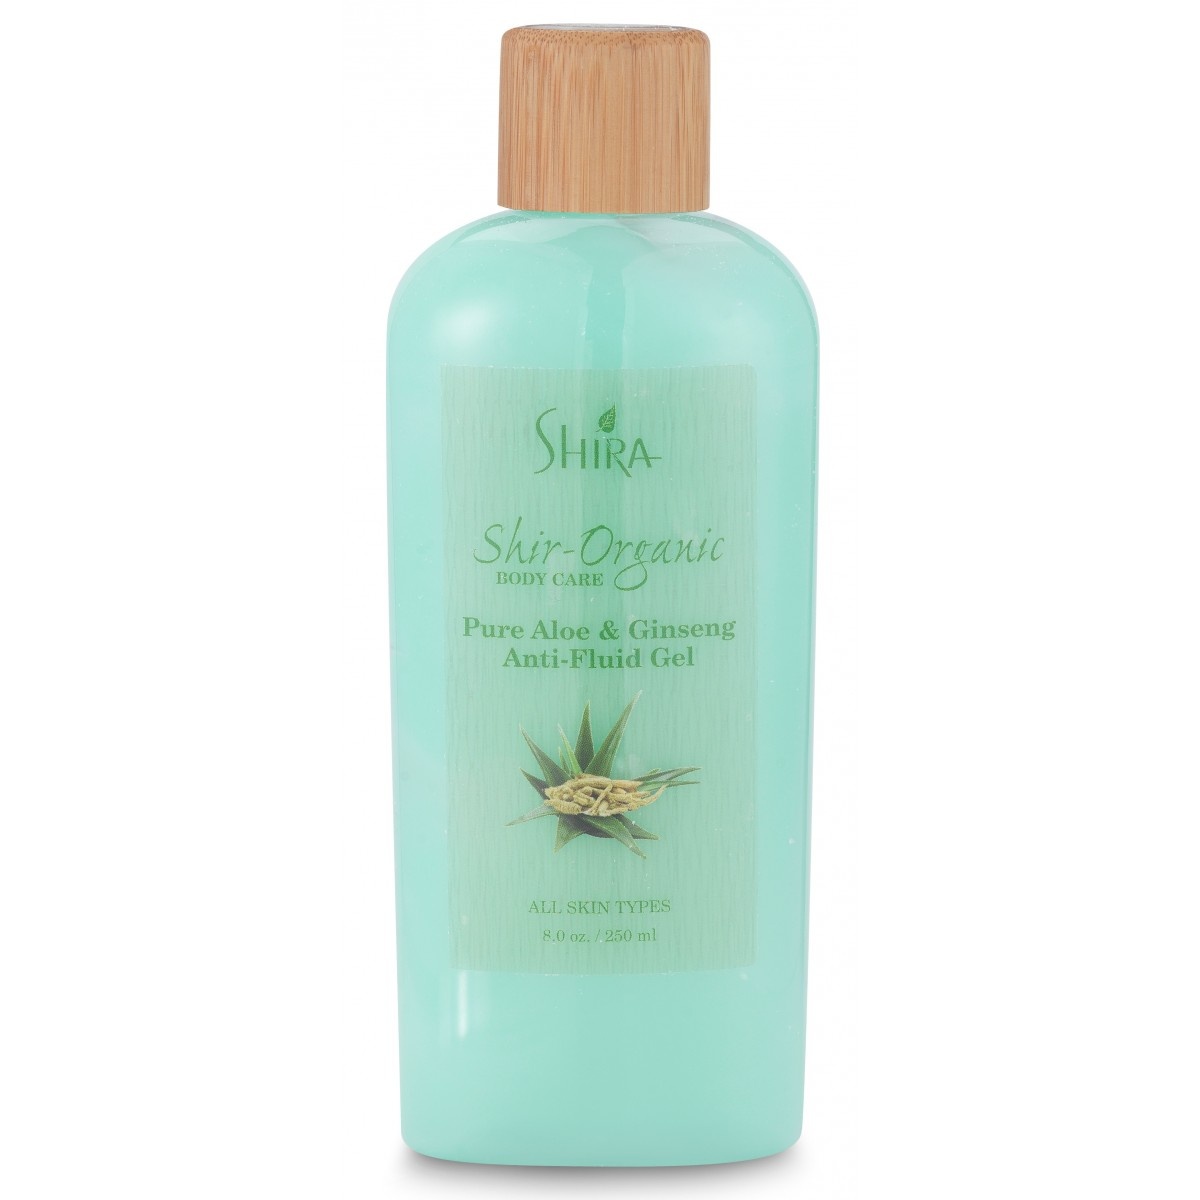 Shira Shir-Organic Pure Aloe & Ginseng Anti-Fluid Gel